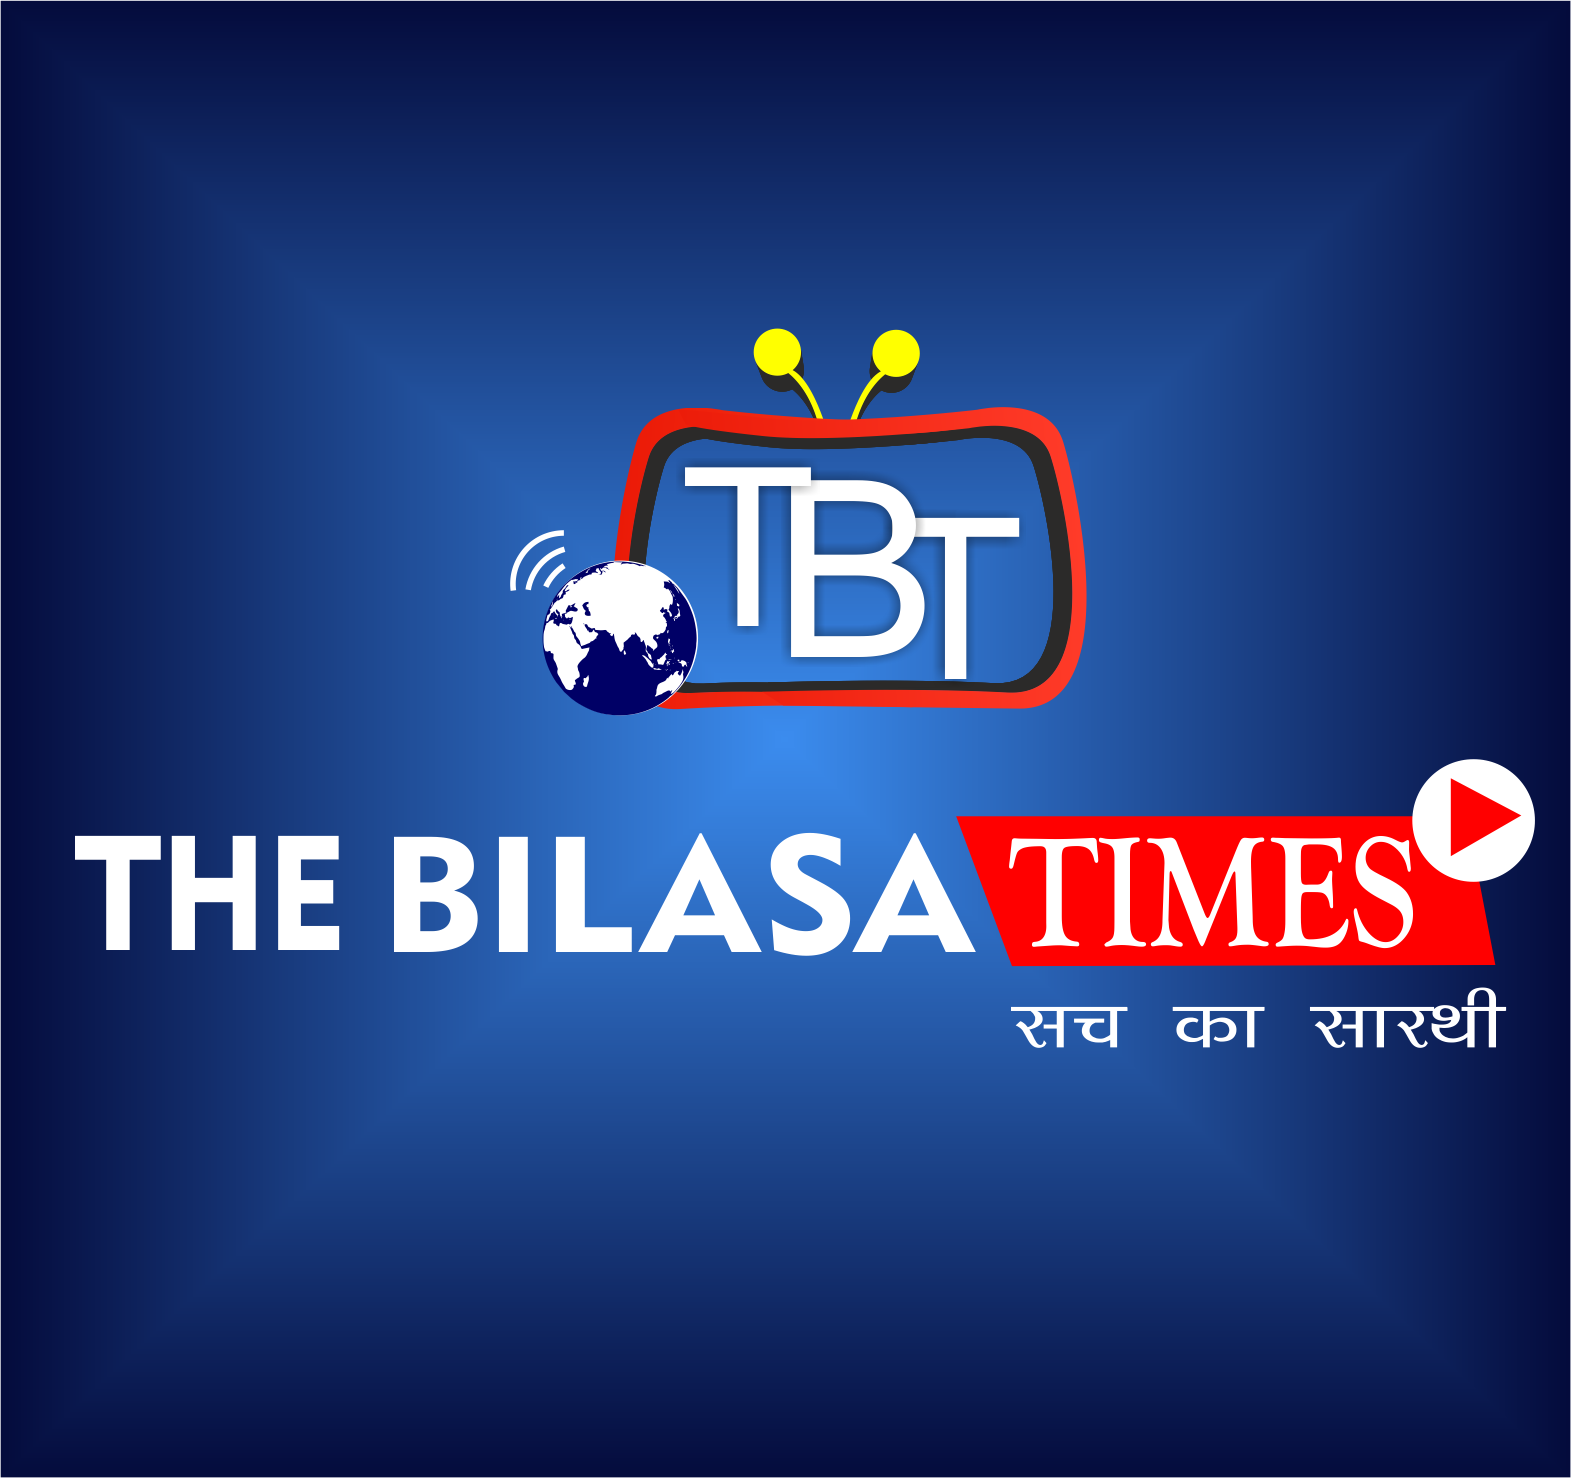 The Bilasa Times